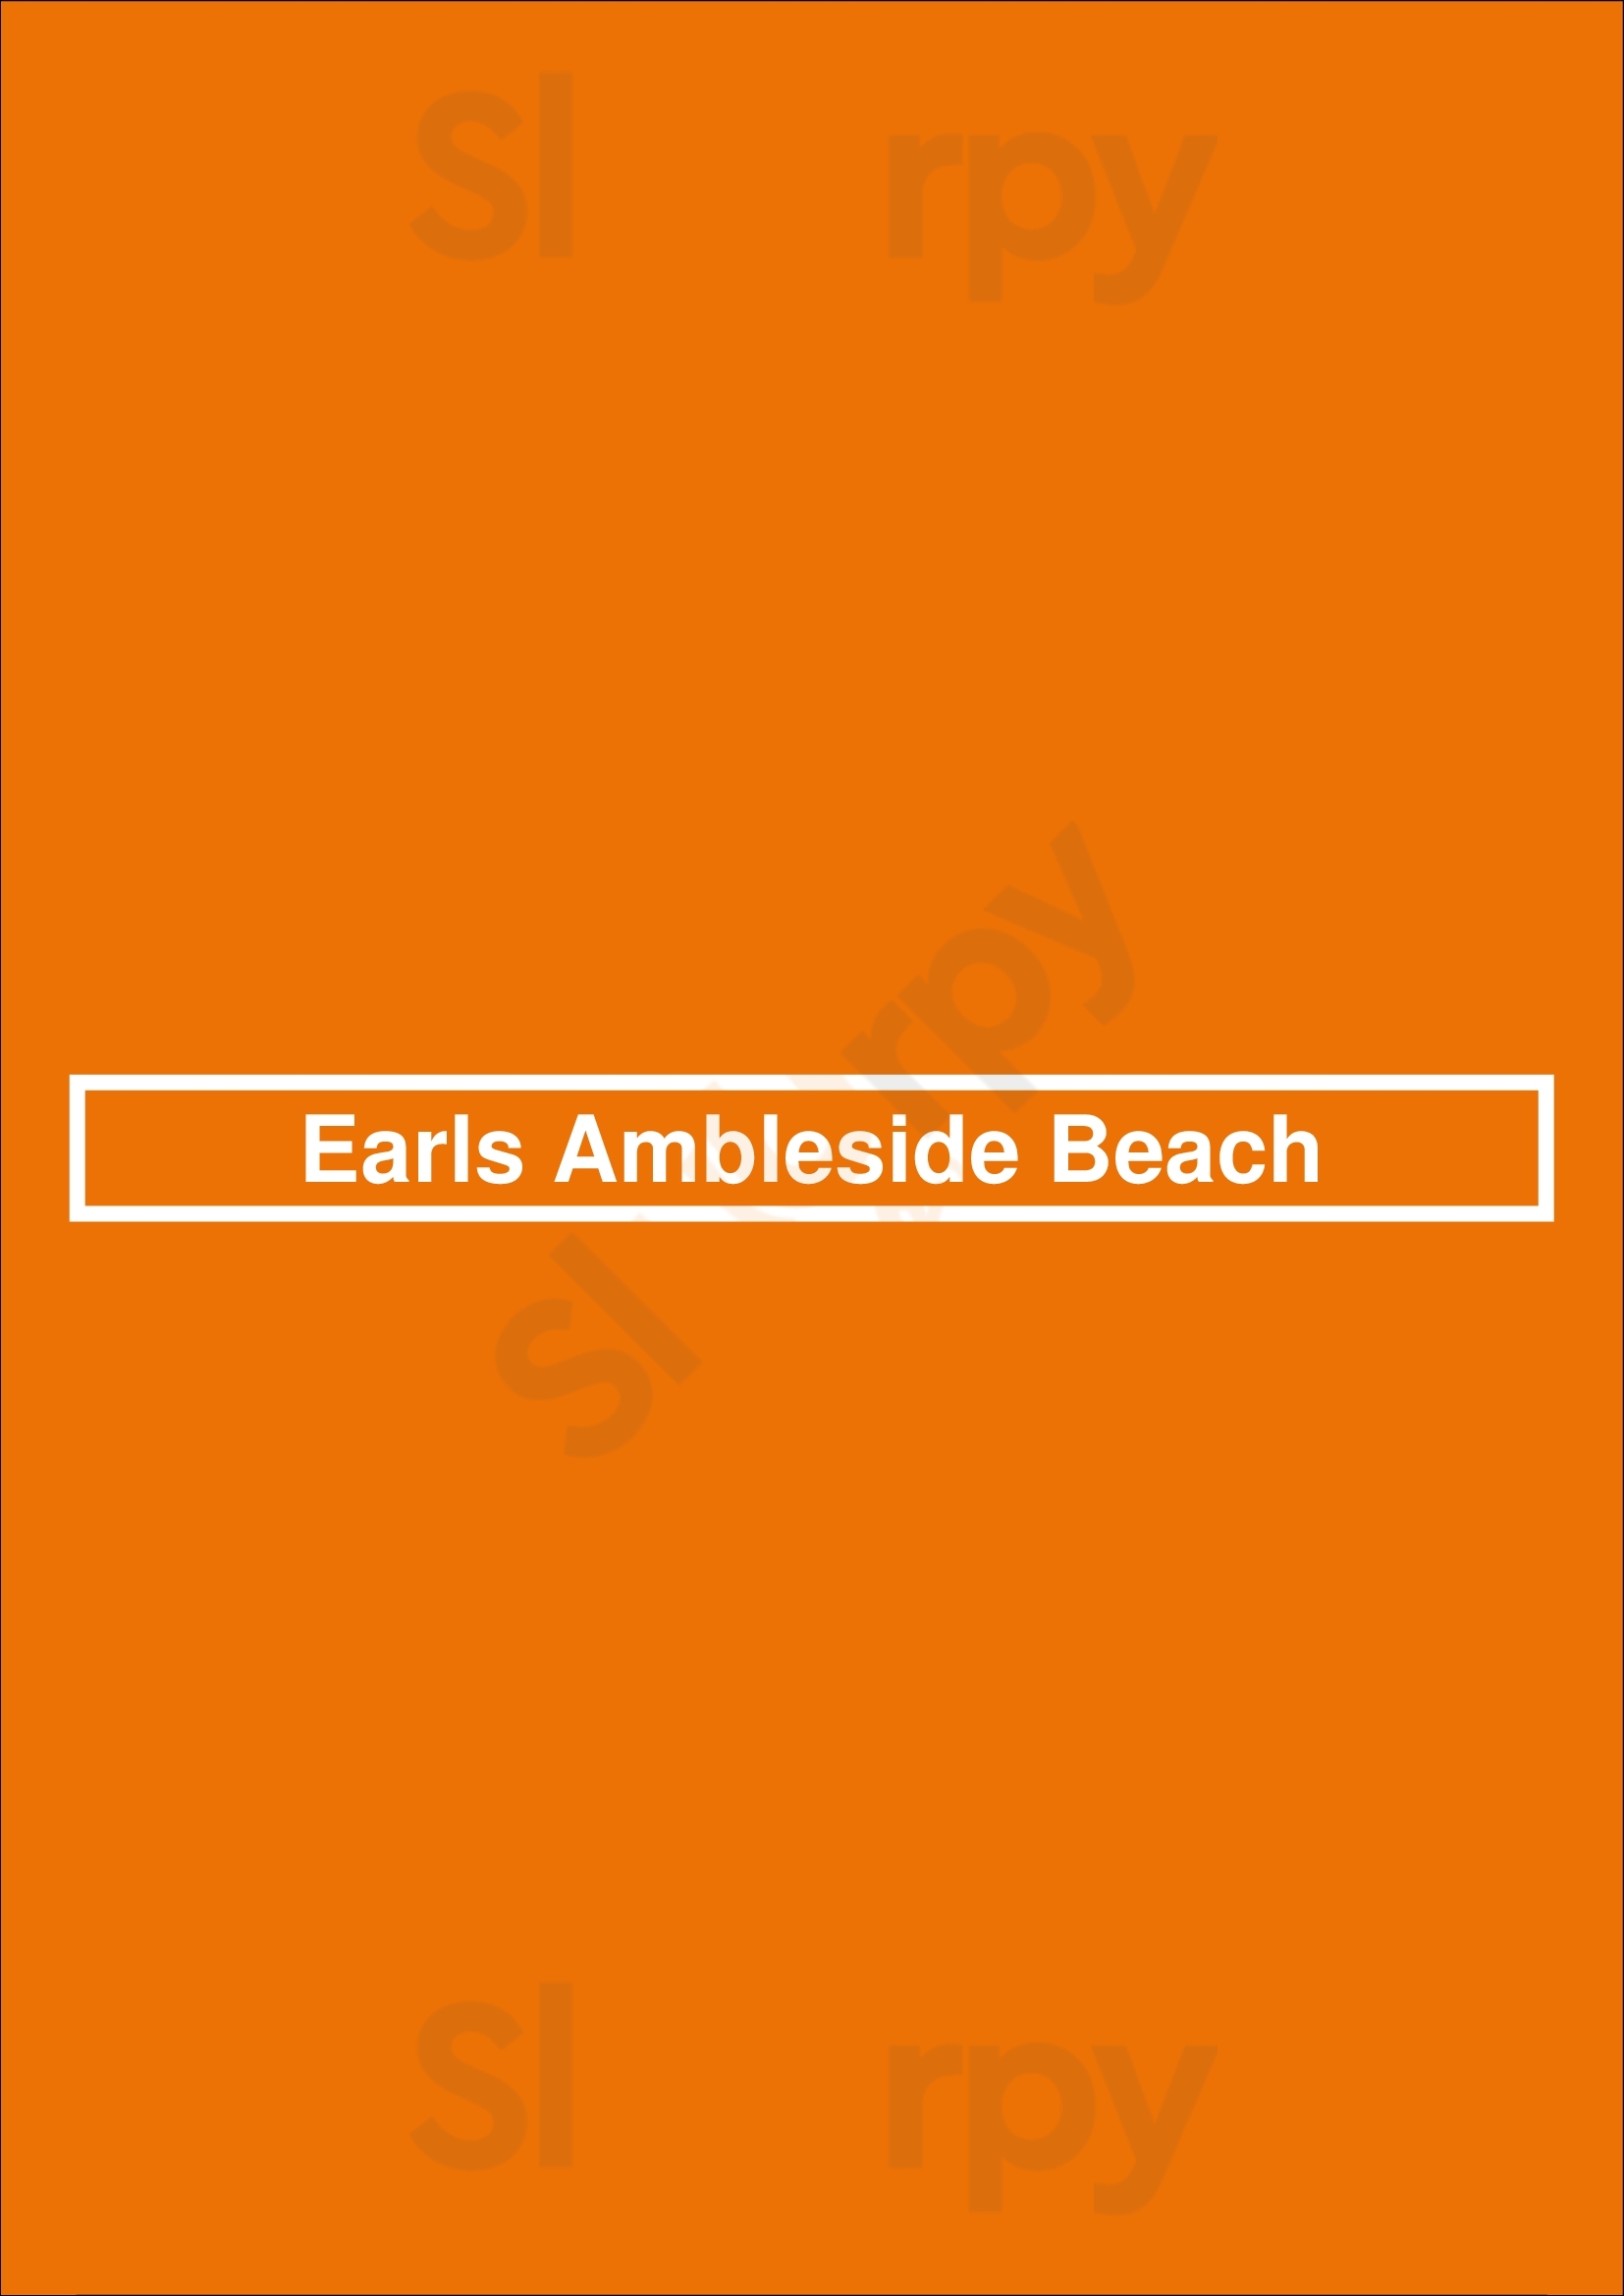 Earls Ambleside Beach West Vancouver Menu - 1